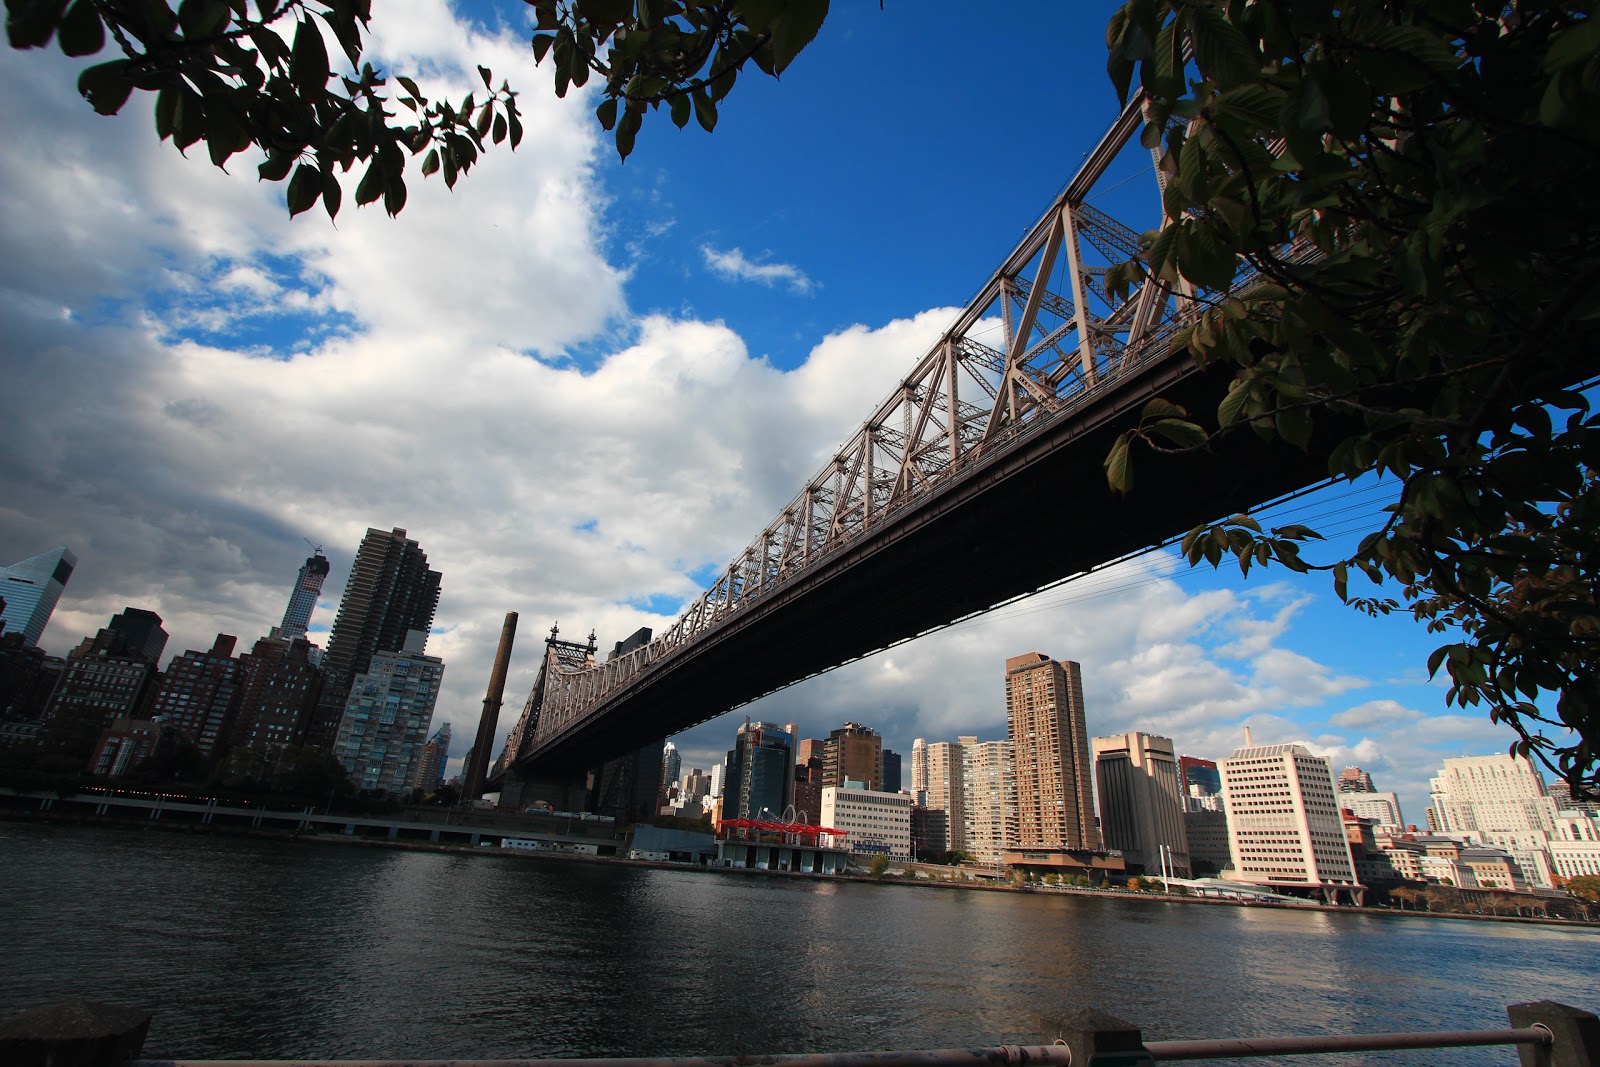 Photo of Ed Koch Queensboro Bridge in New York City, New York, United States - 2 Picture of Point of interest, Establishment